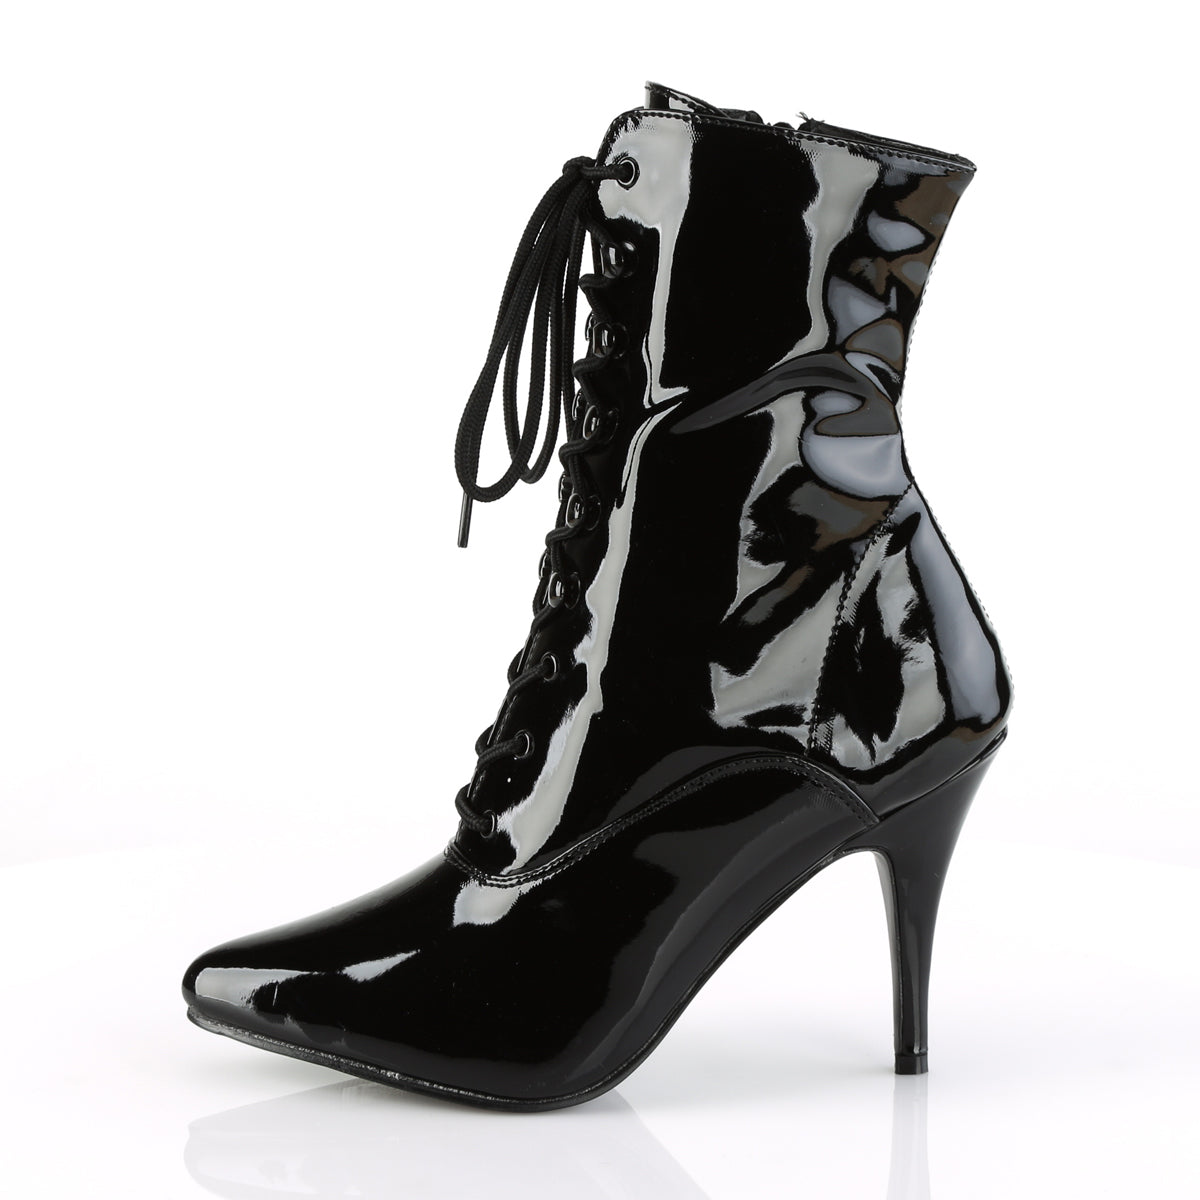 VANITY-1020 Ankle Boots 4" Heel Black Patent Fetish Footwear-Pleaser- Sexy Shoes Pole Dance Heels